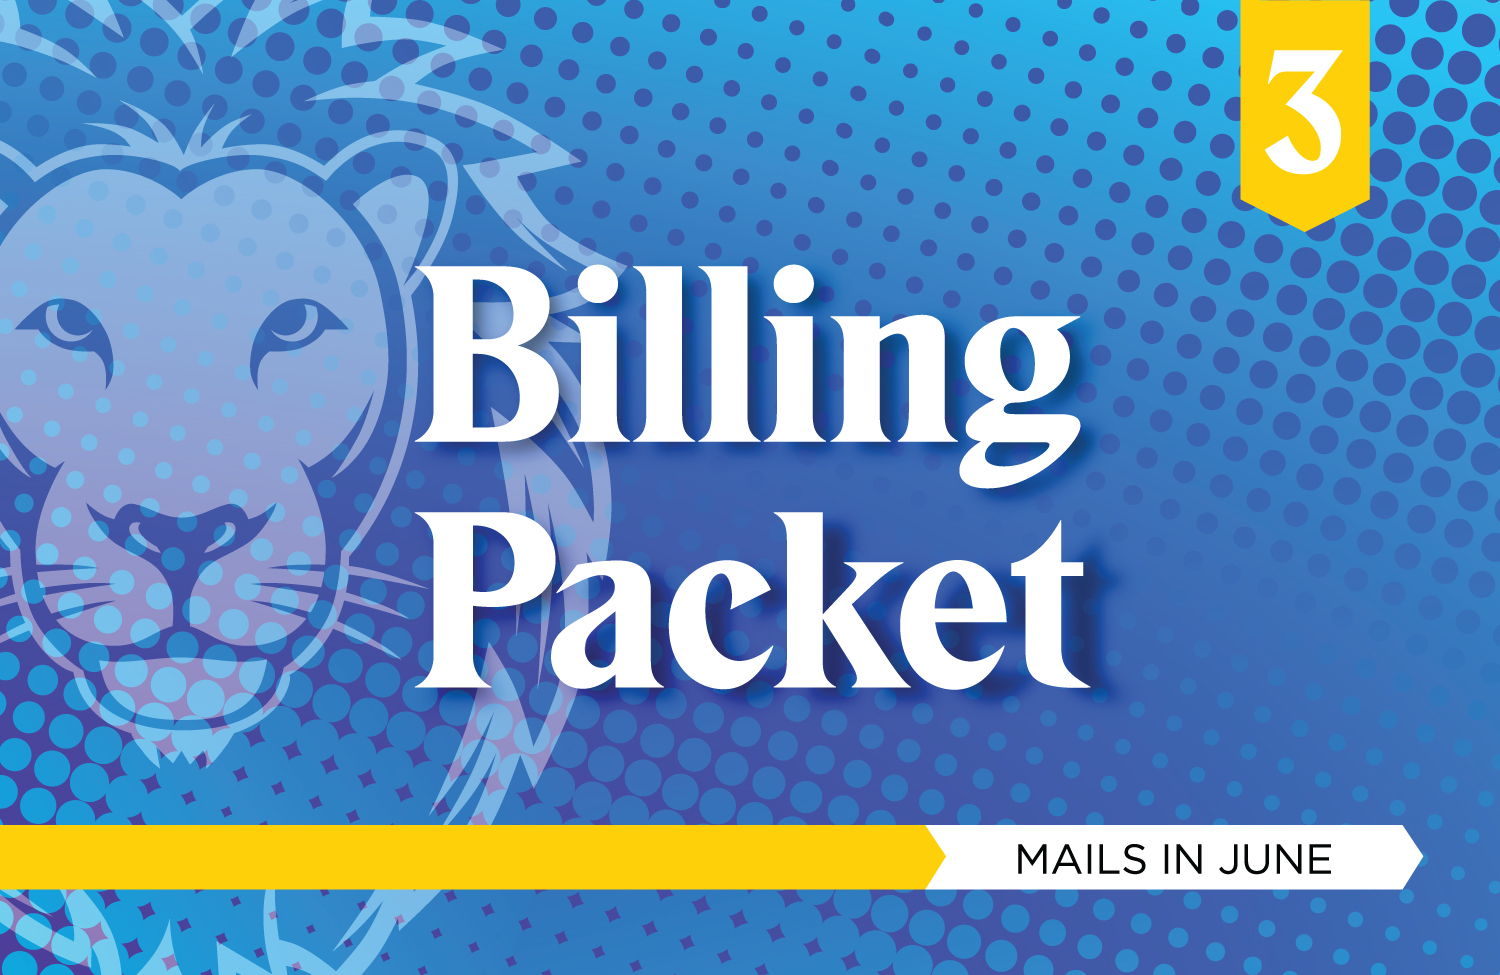 Mailing 3: Billing Packet, mails in June